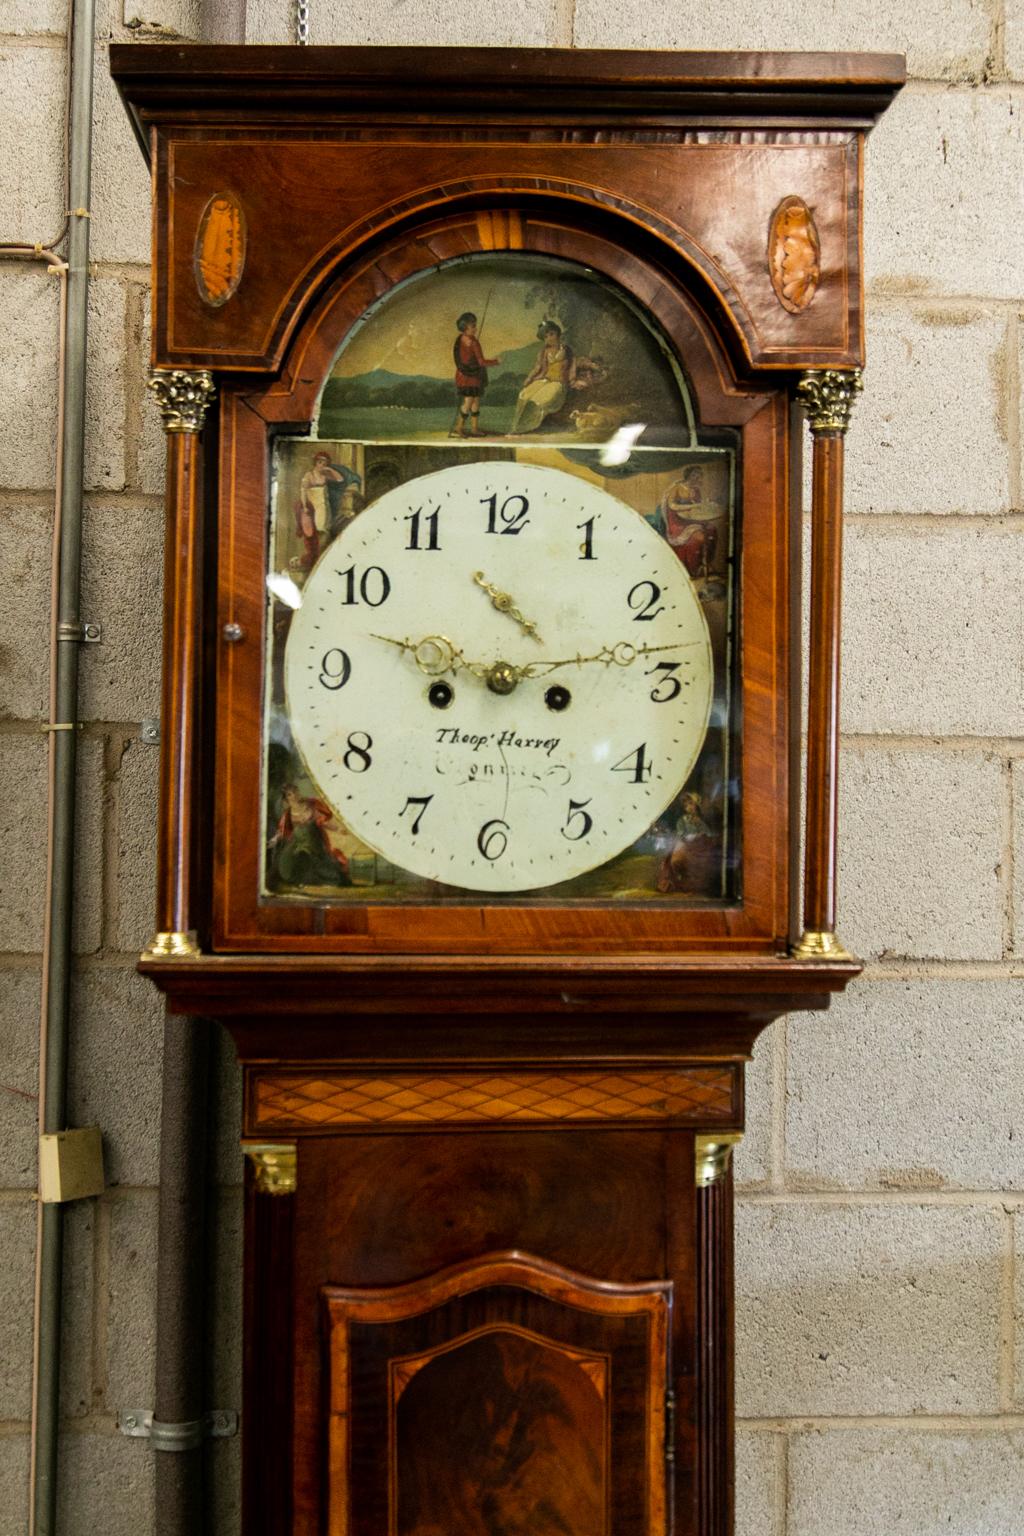 Late 18th Century English Inlaid Grandfather Clock